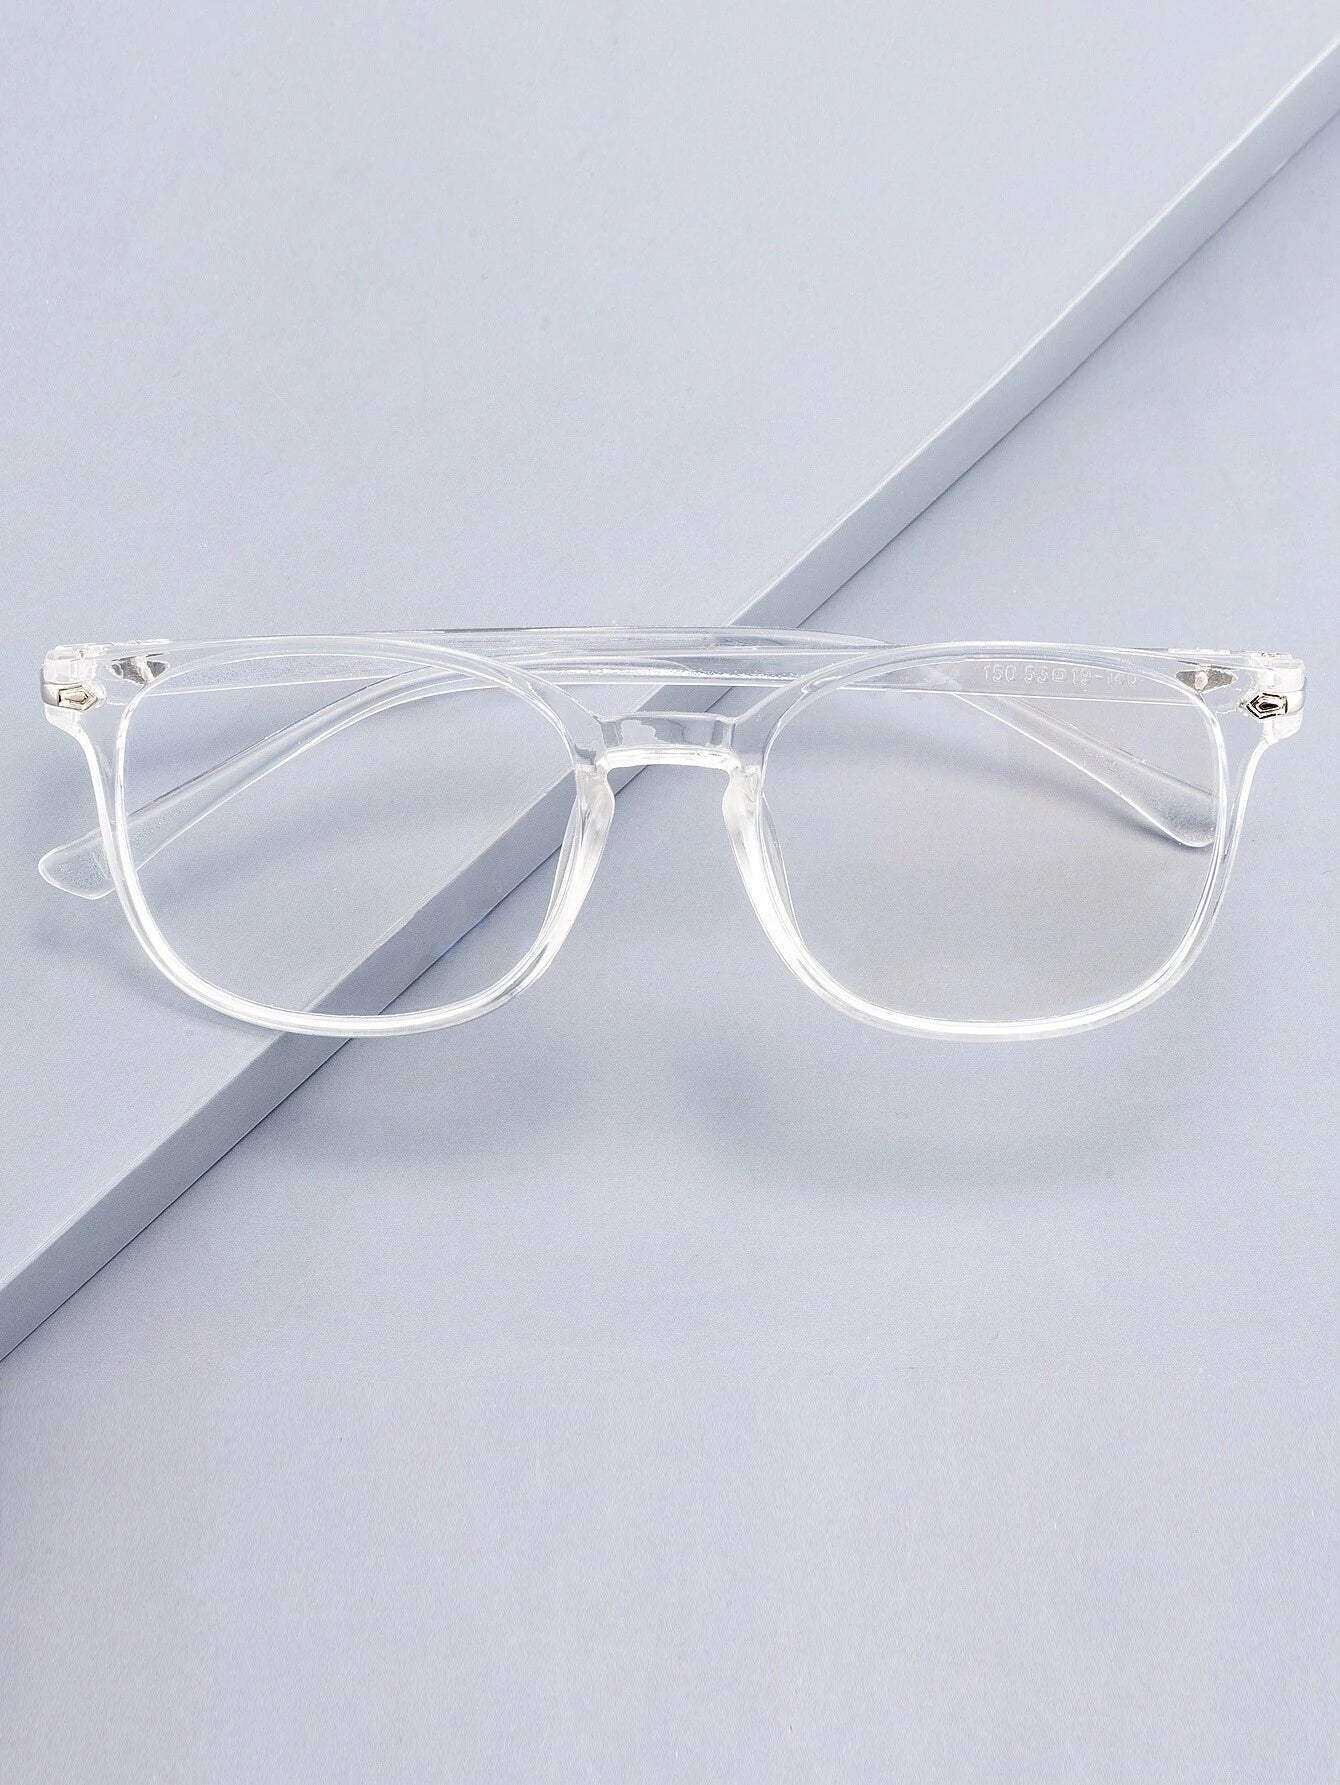 1pair Acrylic Frame Anti-blue Light Glasses